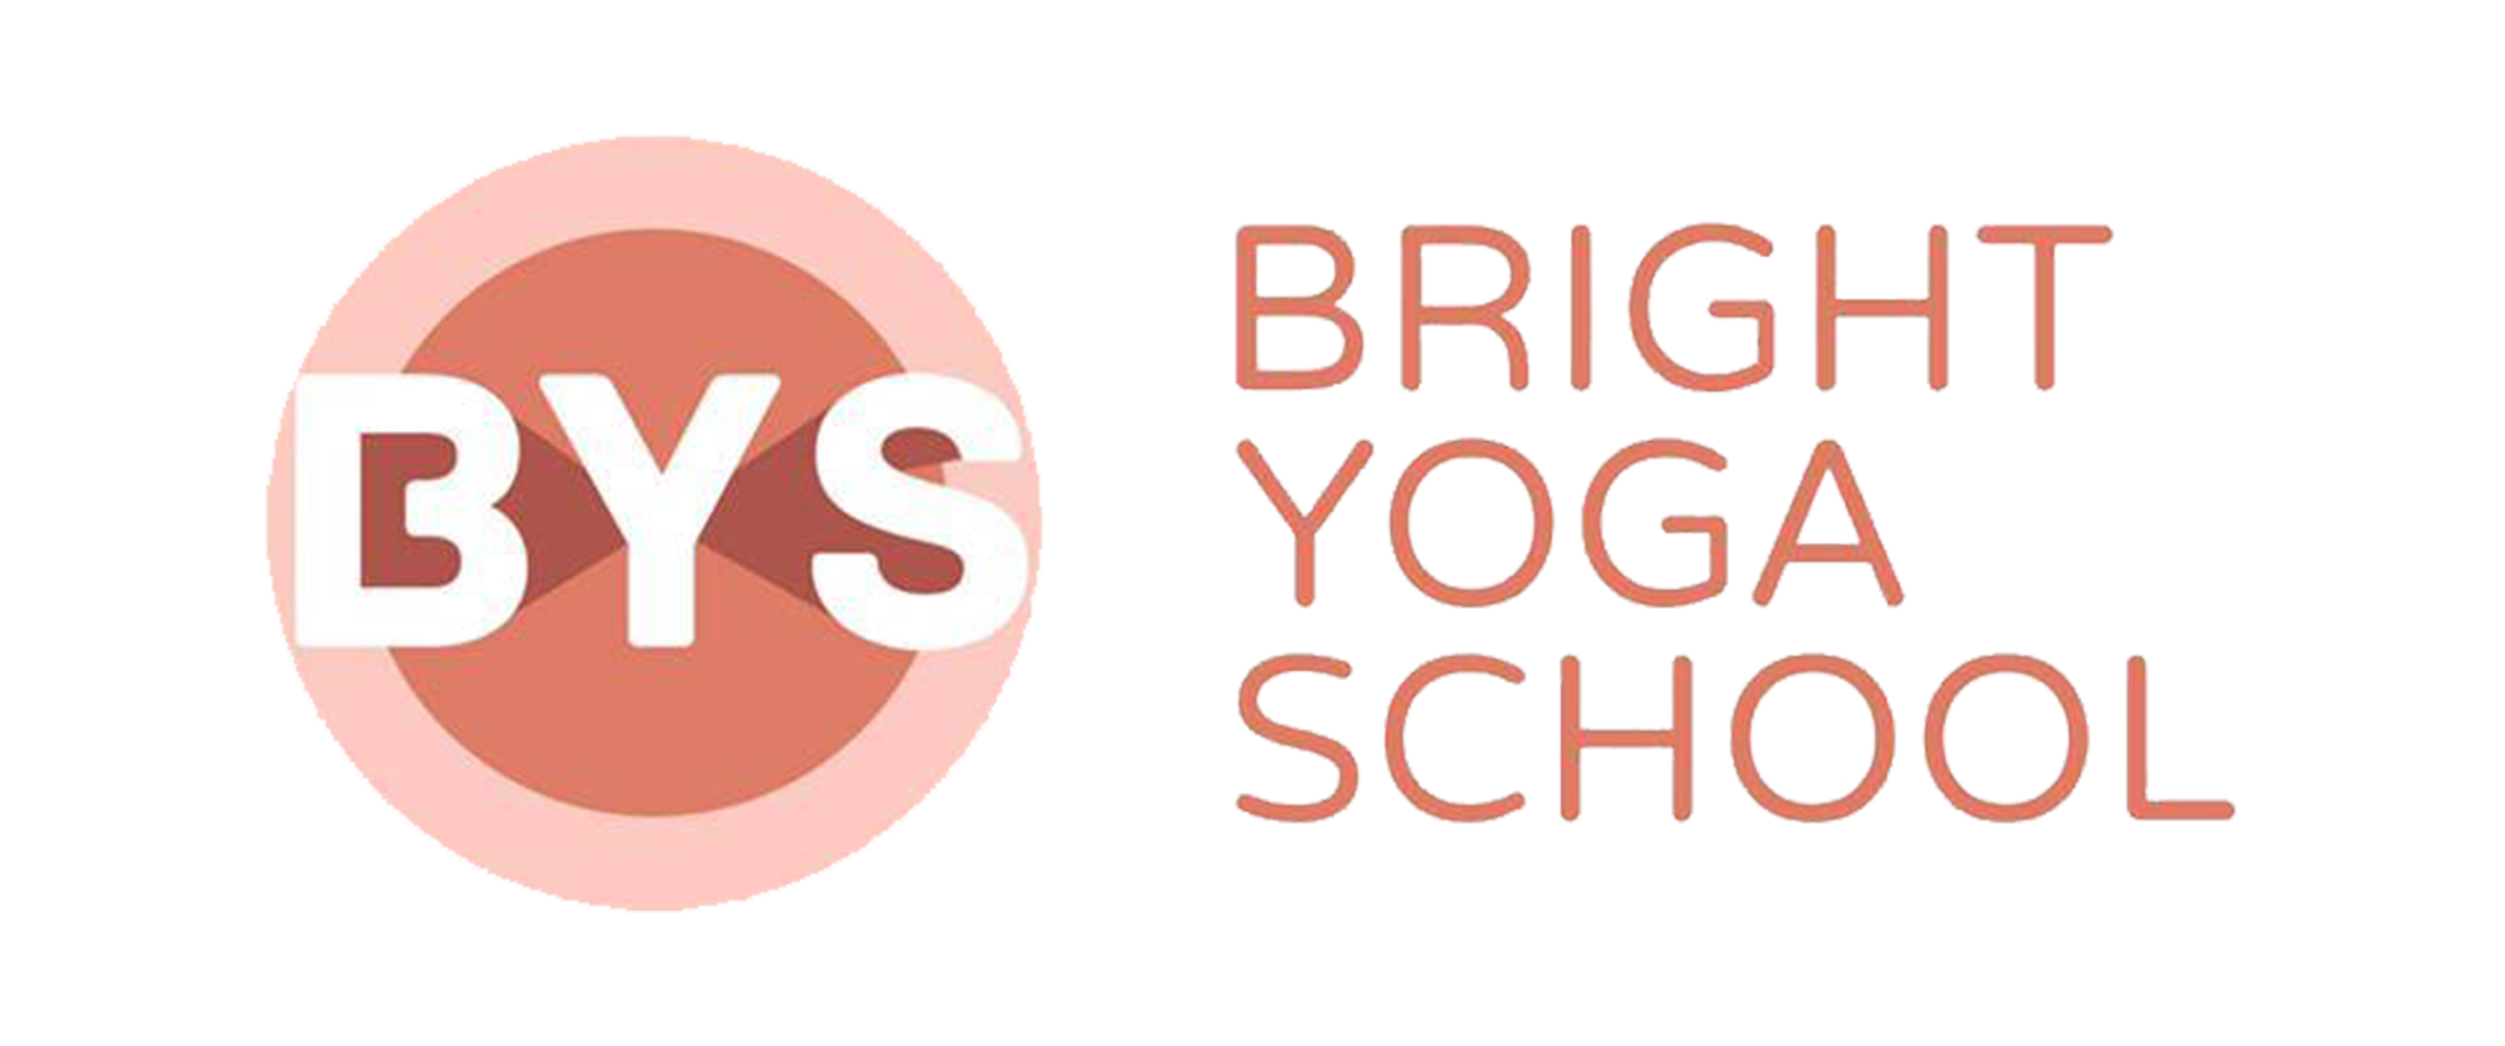 Bright Yoga School